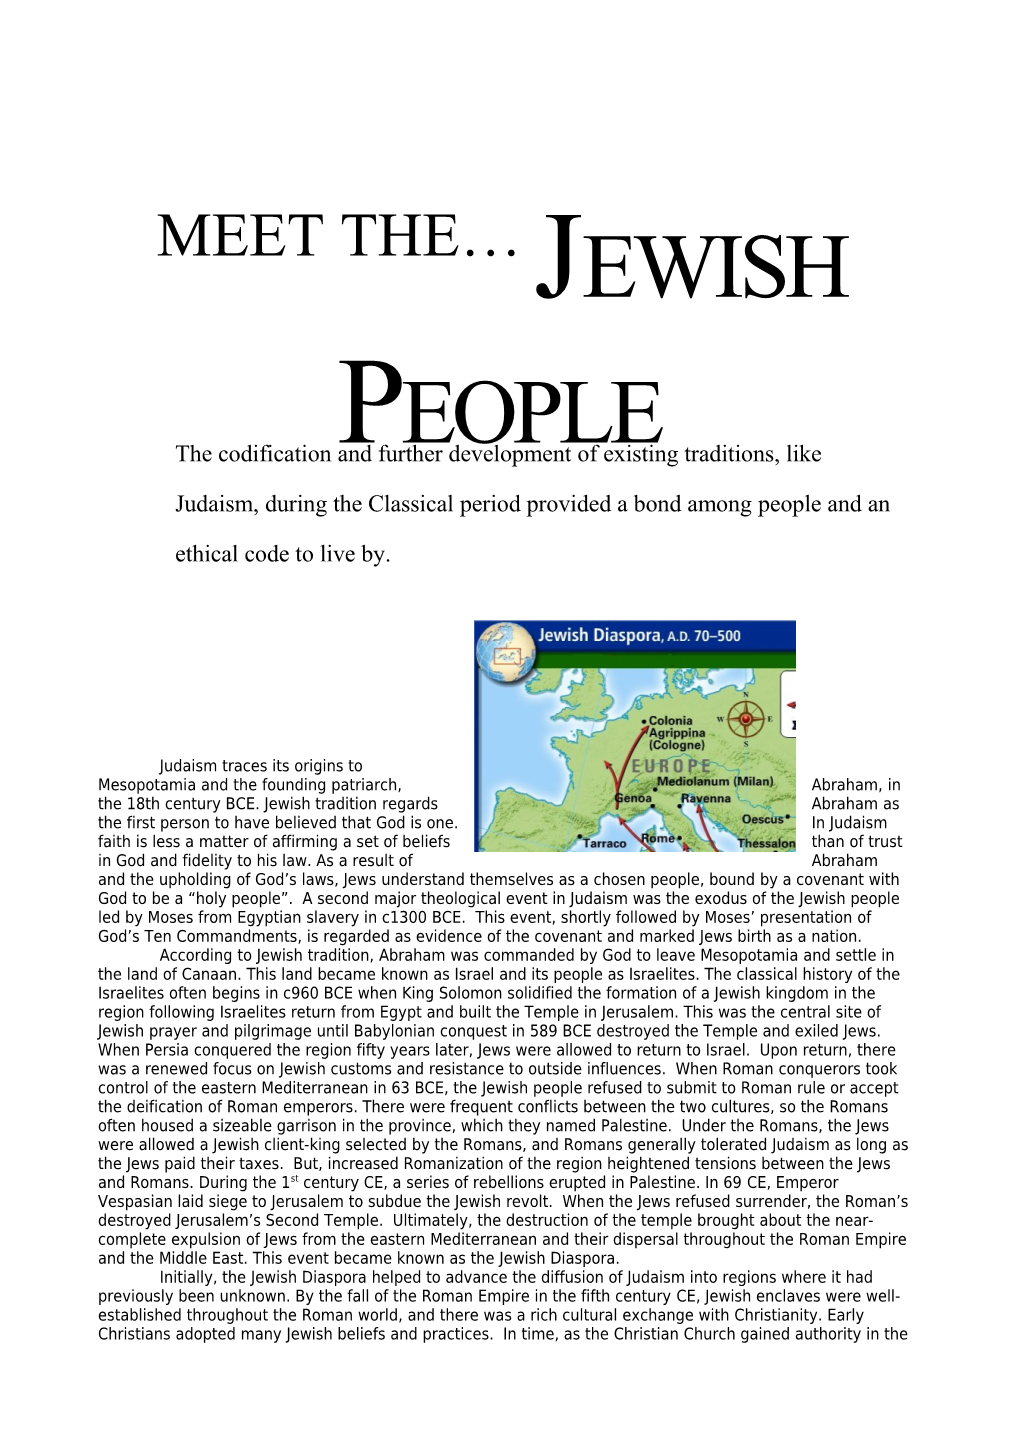 MEET the Jewish People